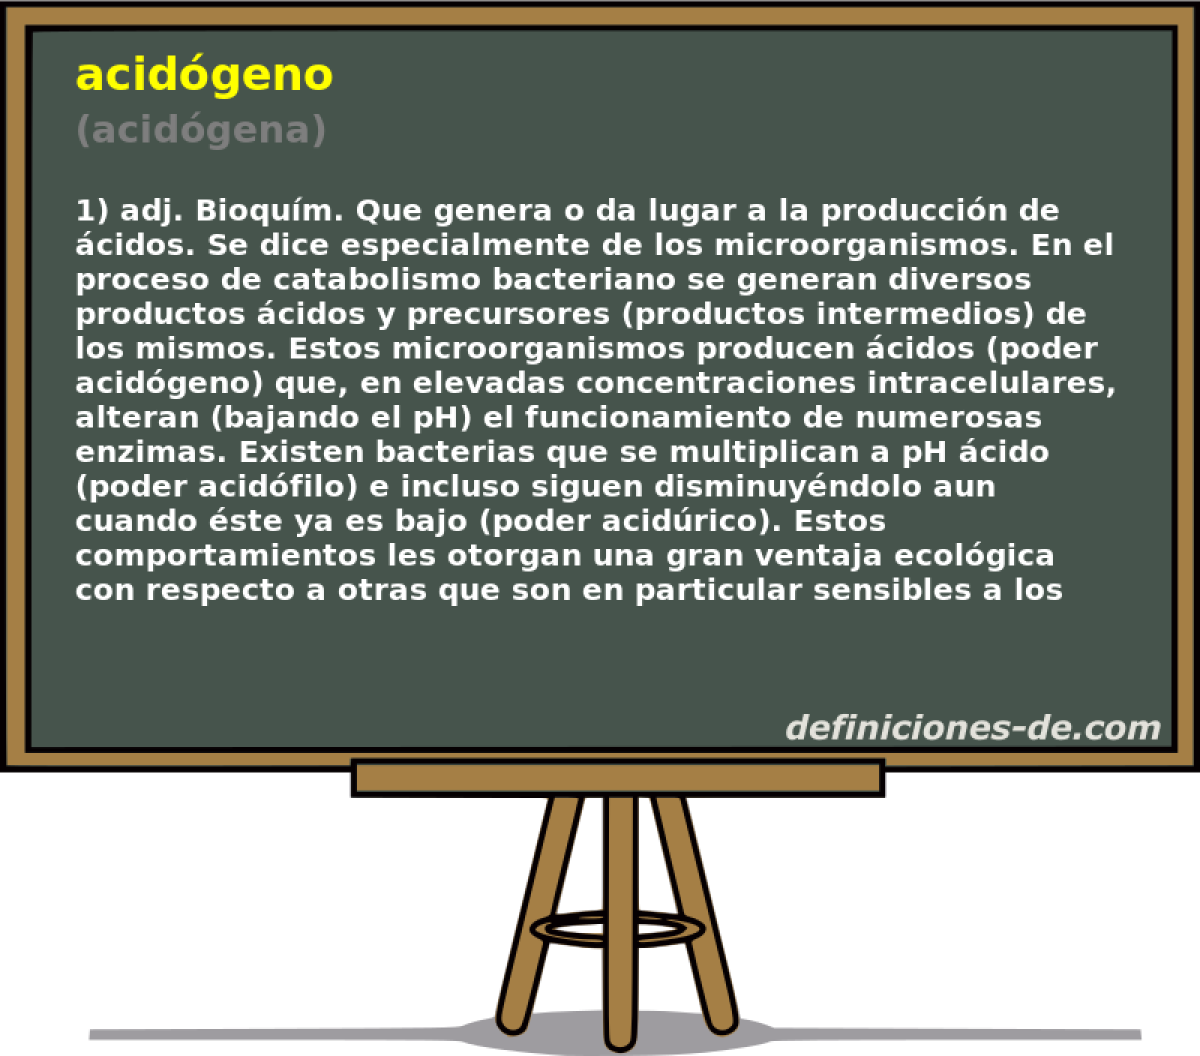 acidgeno (acidgena)